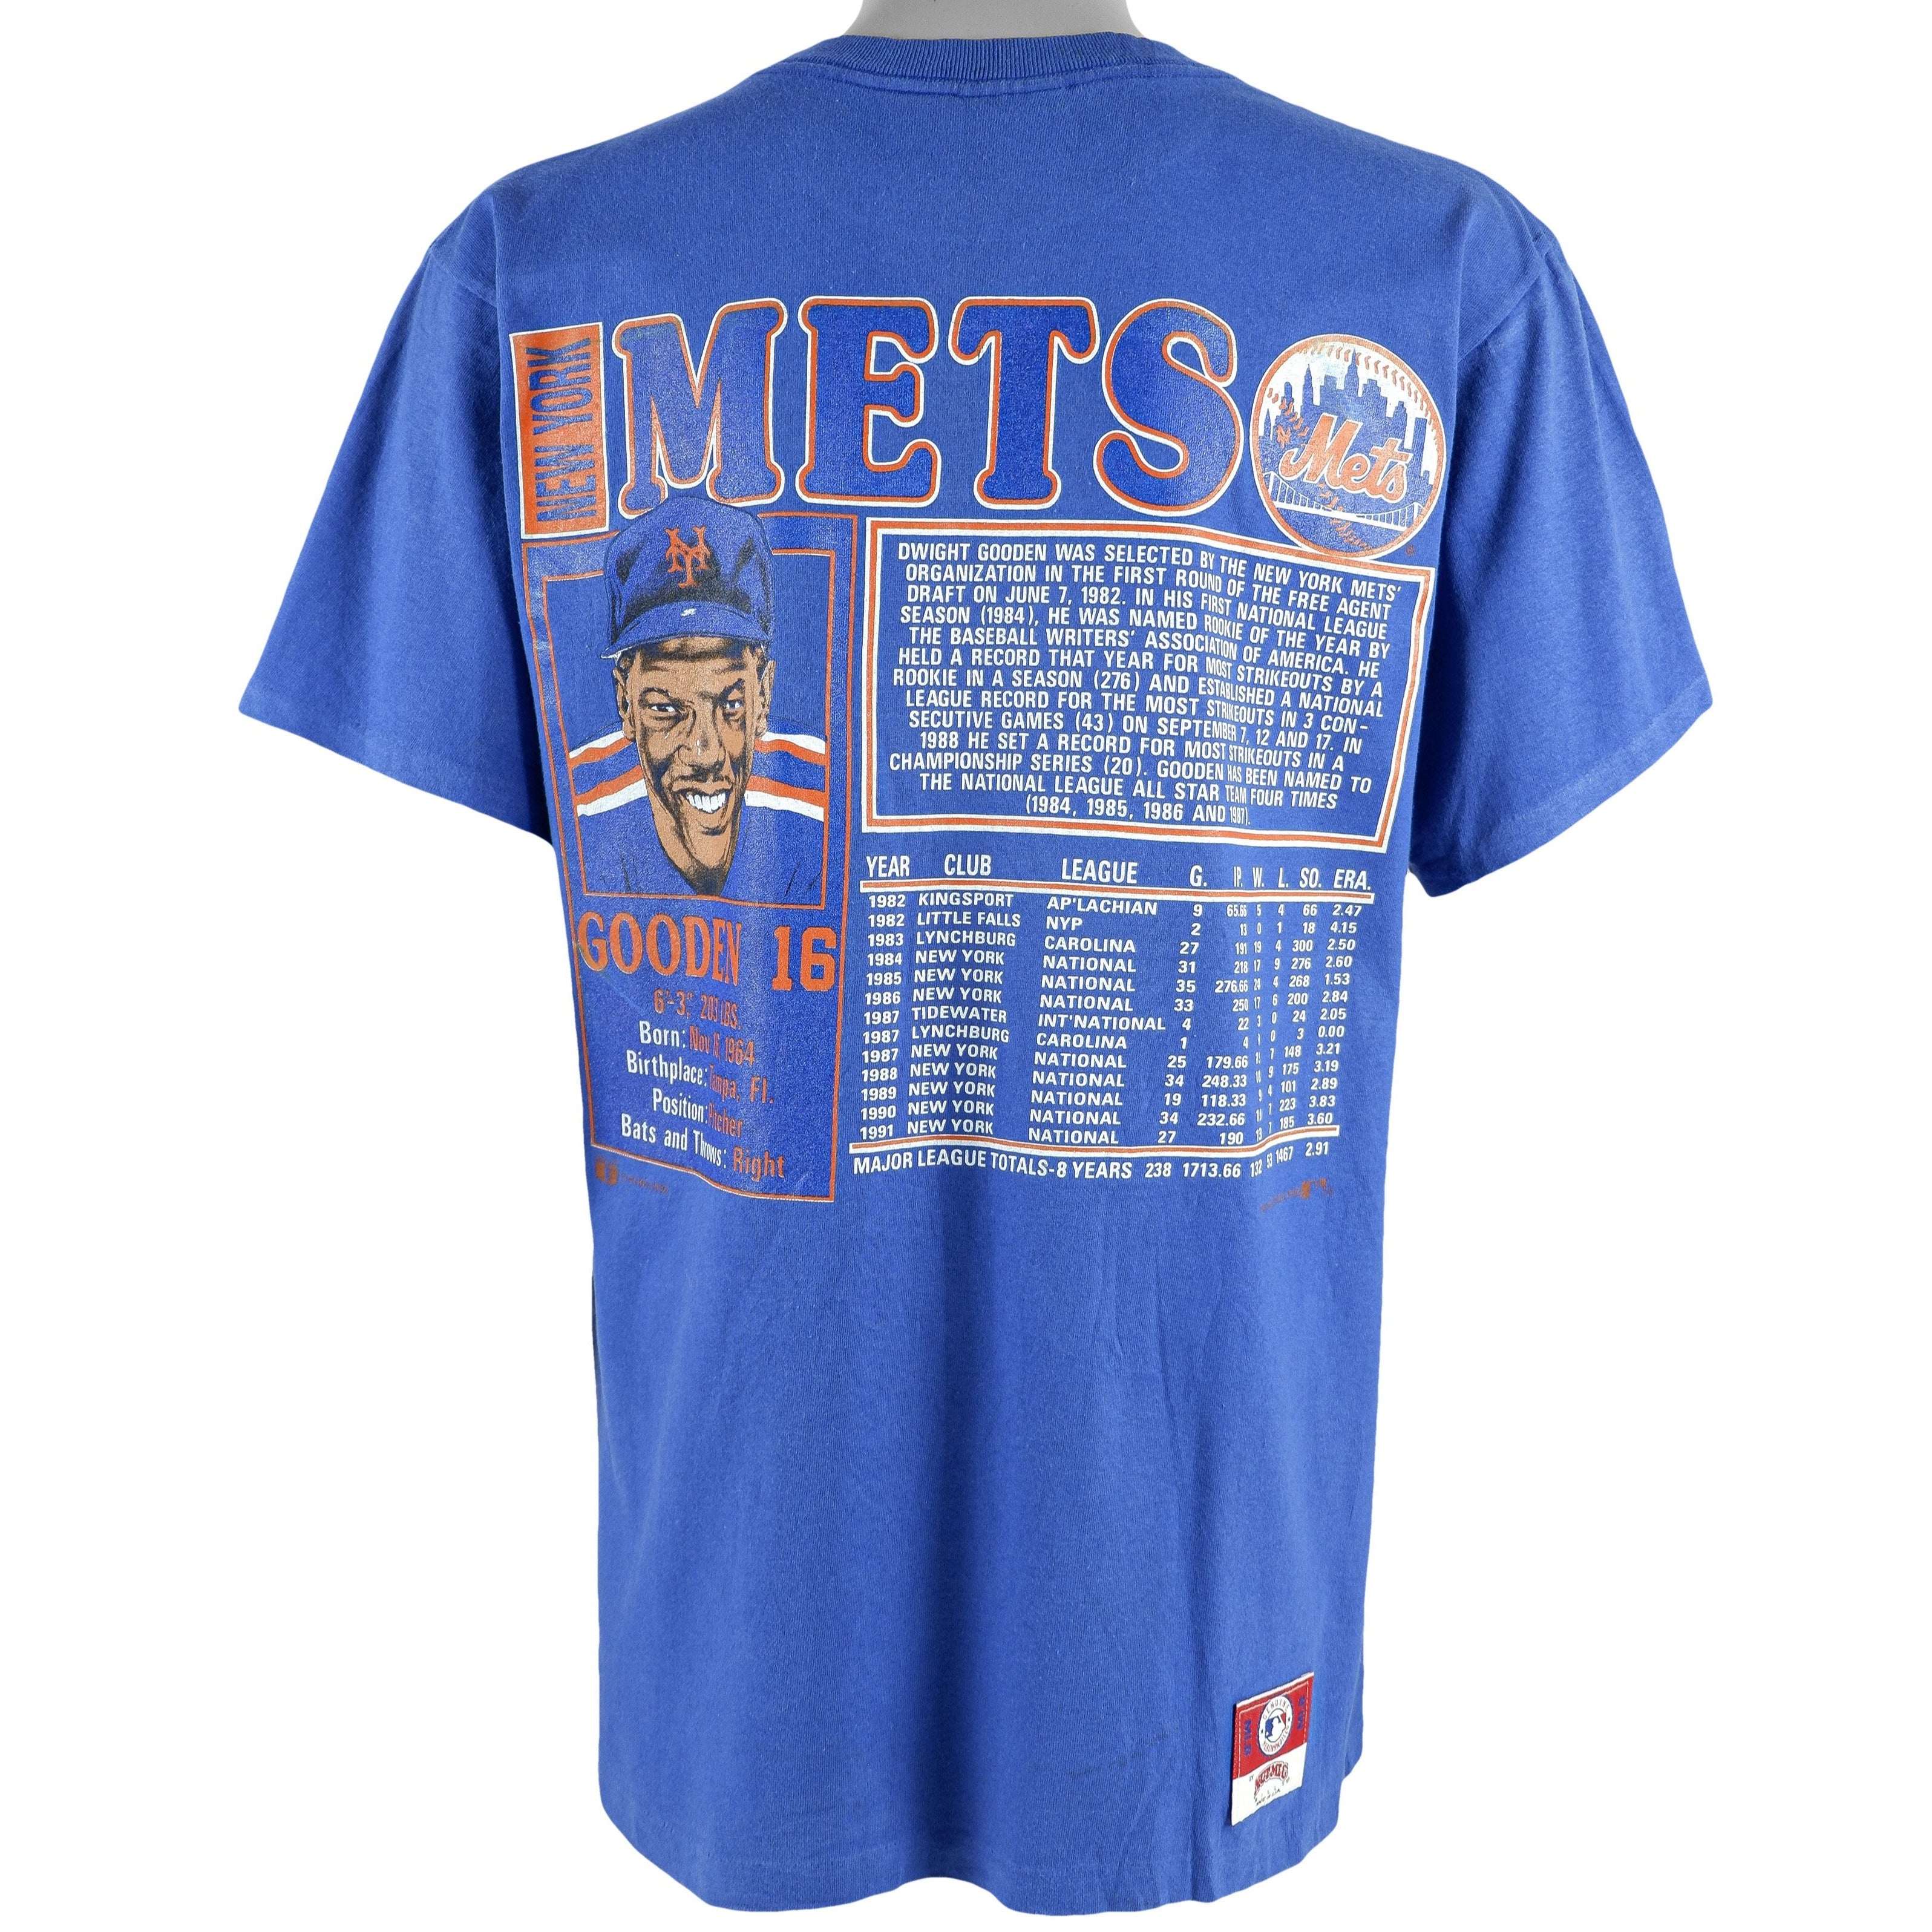 Vintage 90's New York Mets MLB Blue T Shirt Size L 